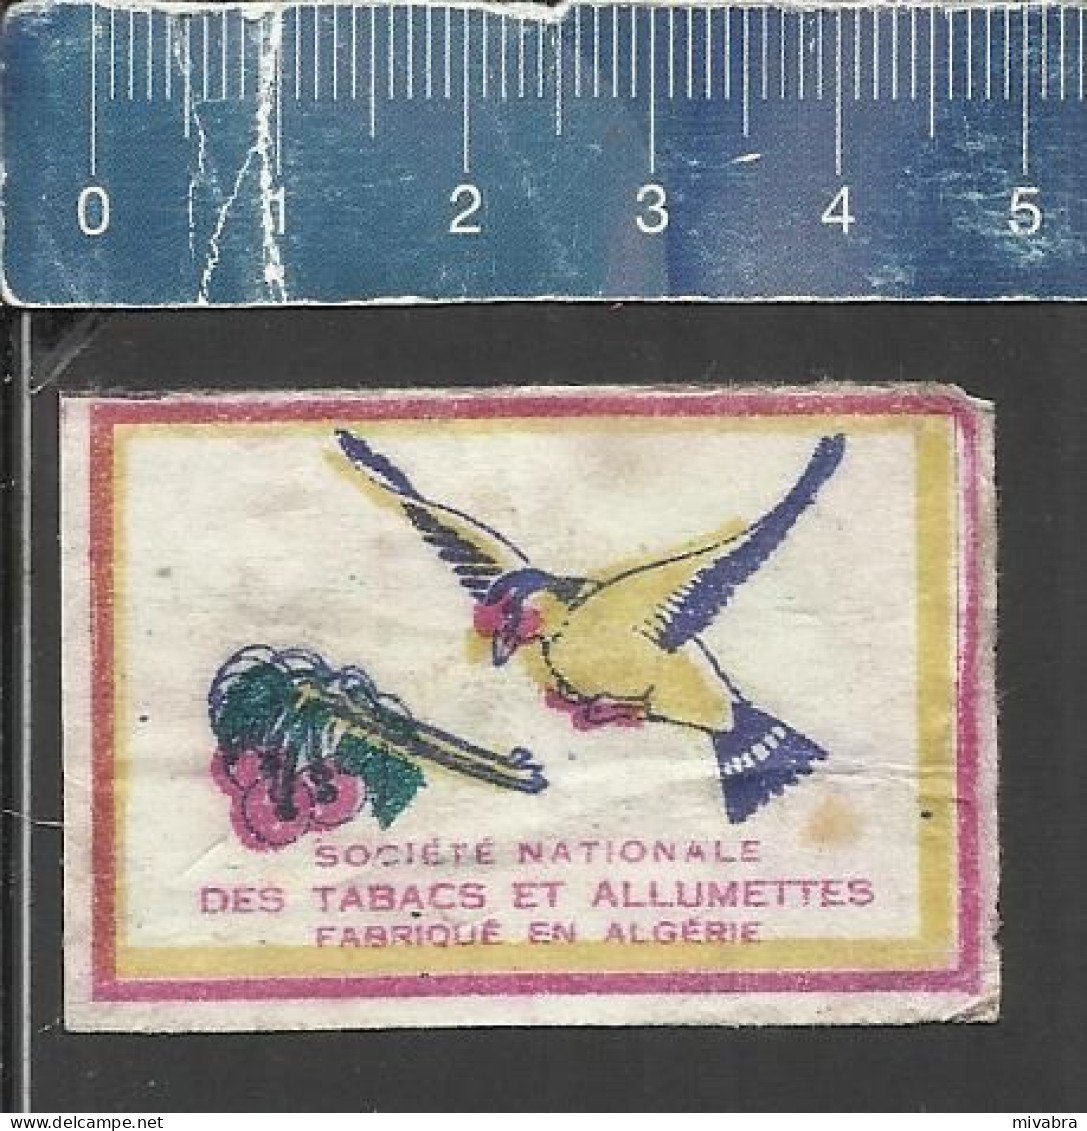 BIRD ( OISEAU VOGEL ) - OLD MATCHBOX LABEL ALGERIA - Cajas De Cerillas - Etiquetas